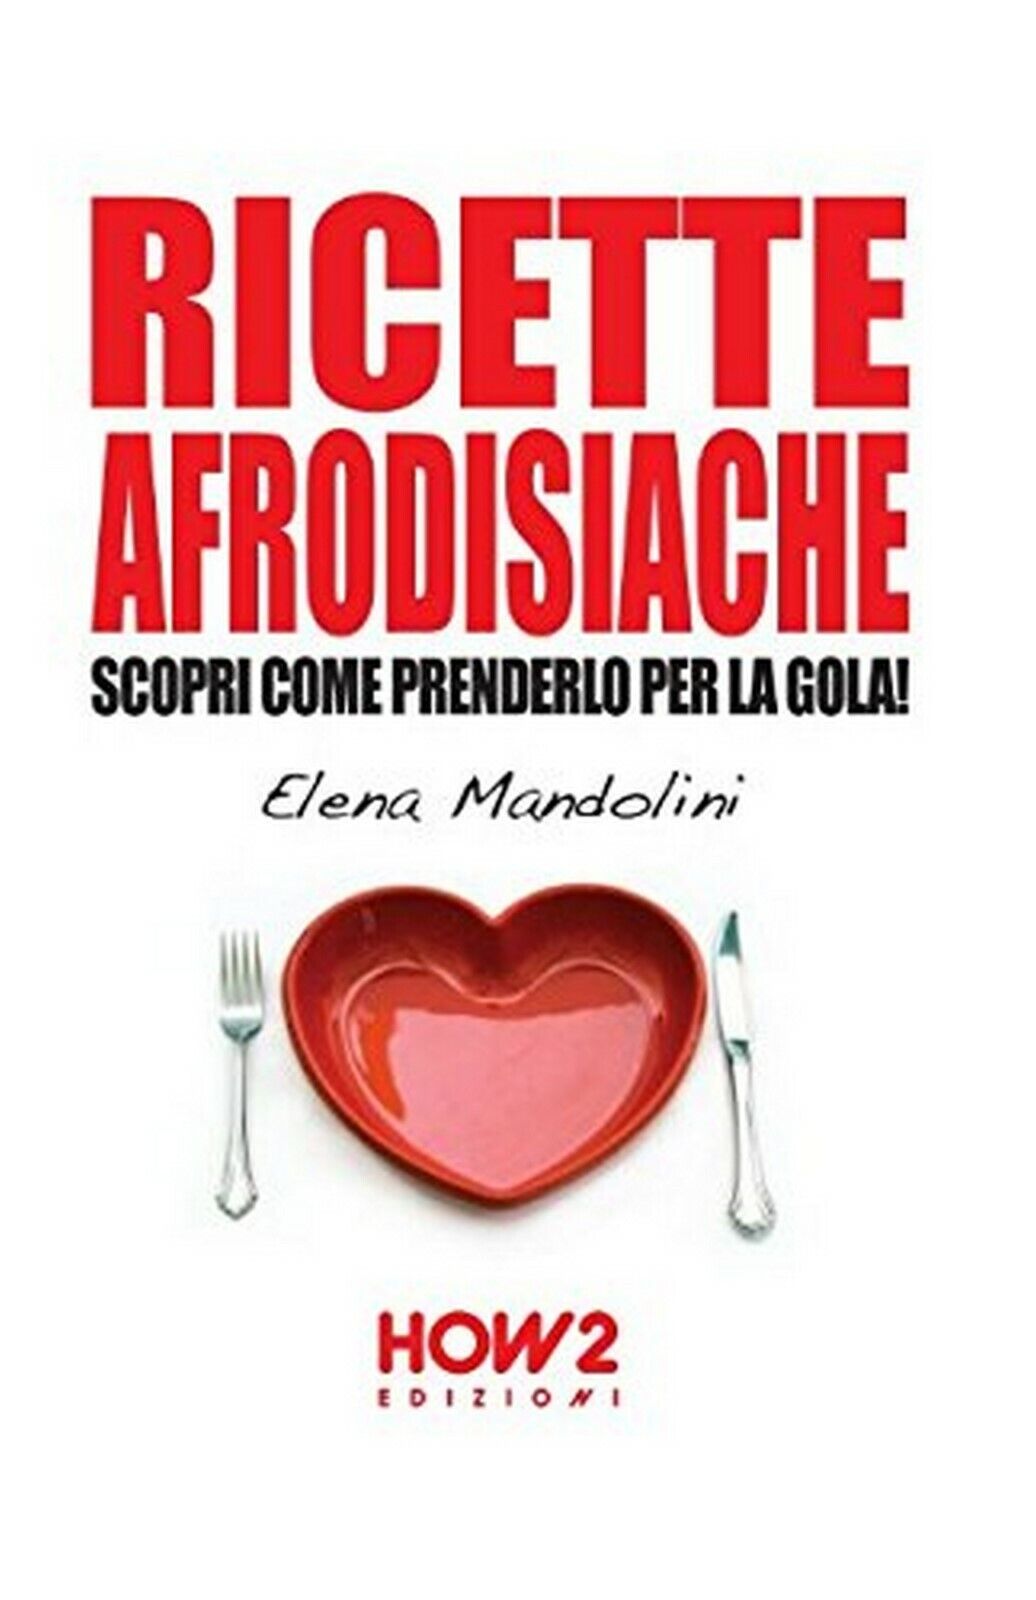 Ricette afrodisiache  - Elena Mandolini,  2015,  How2